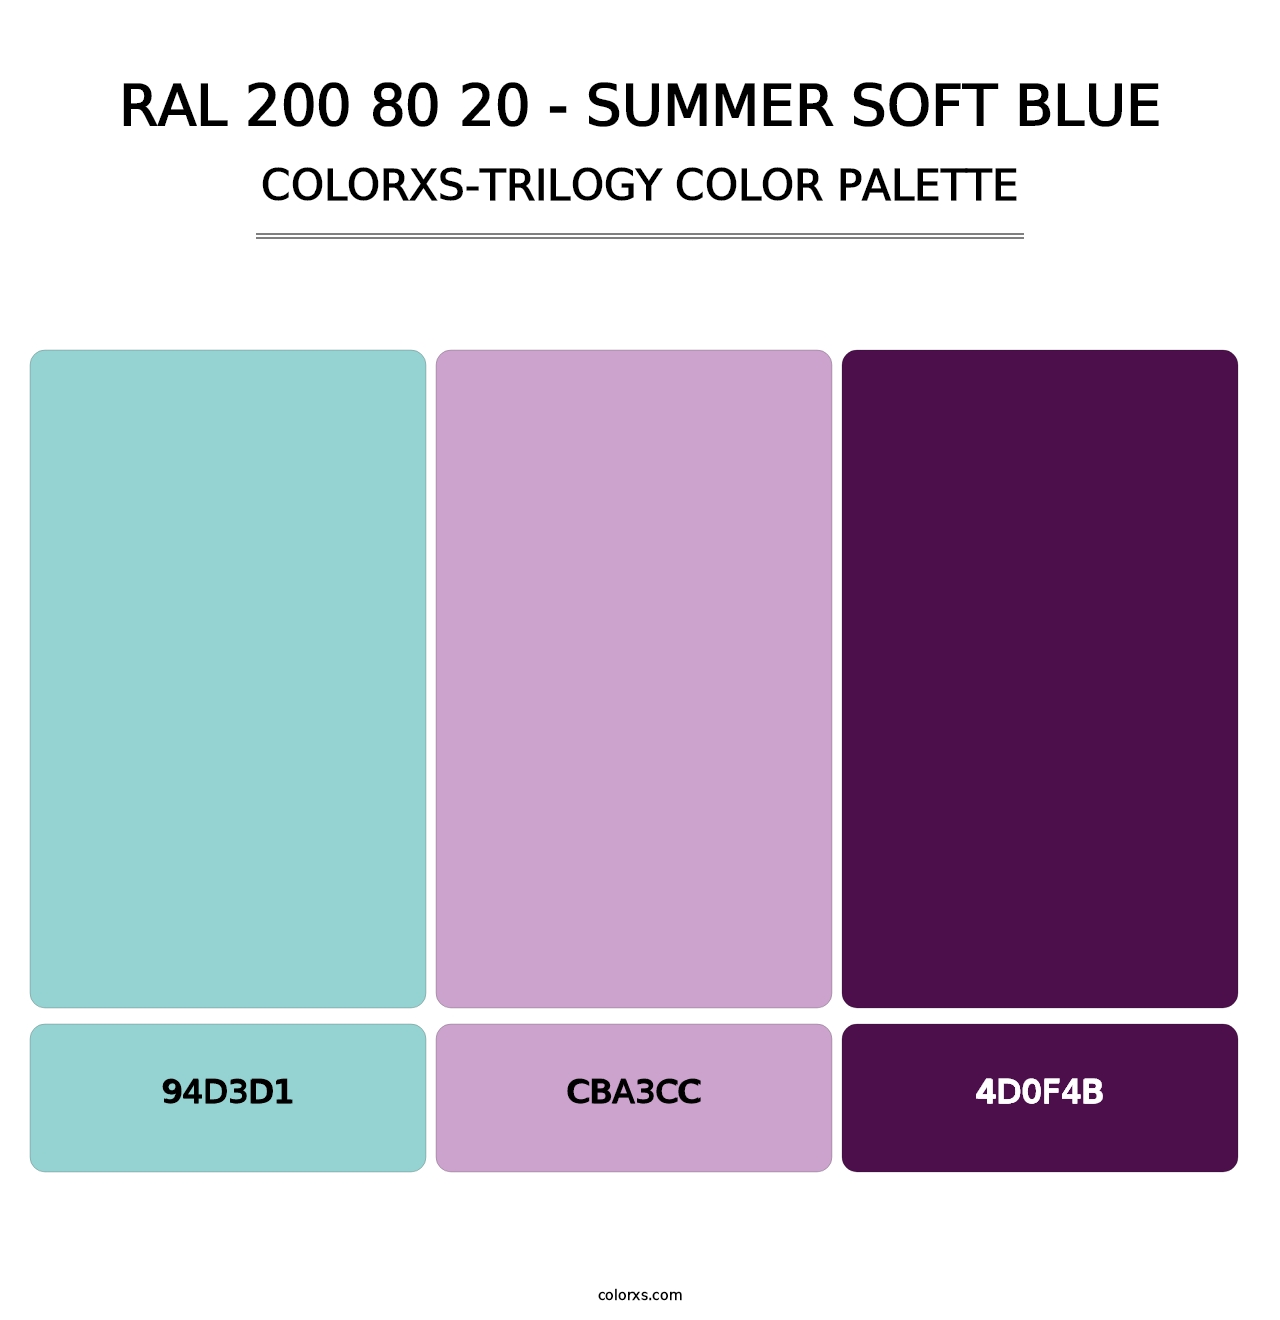 RAL 200 80 20 - Summer Soft Blue - Colorxs Trilogy Palette